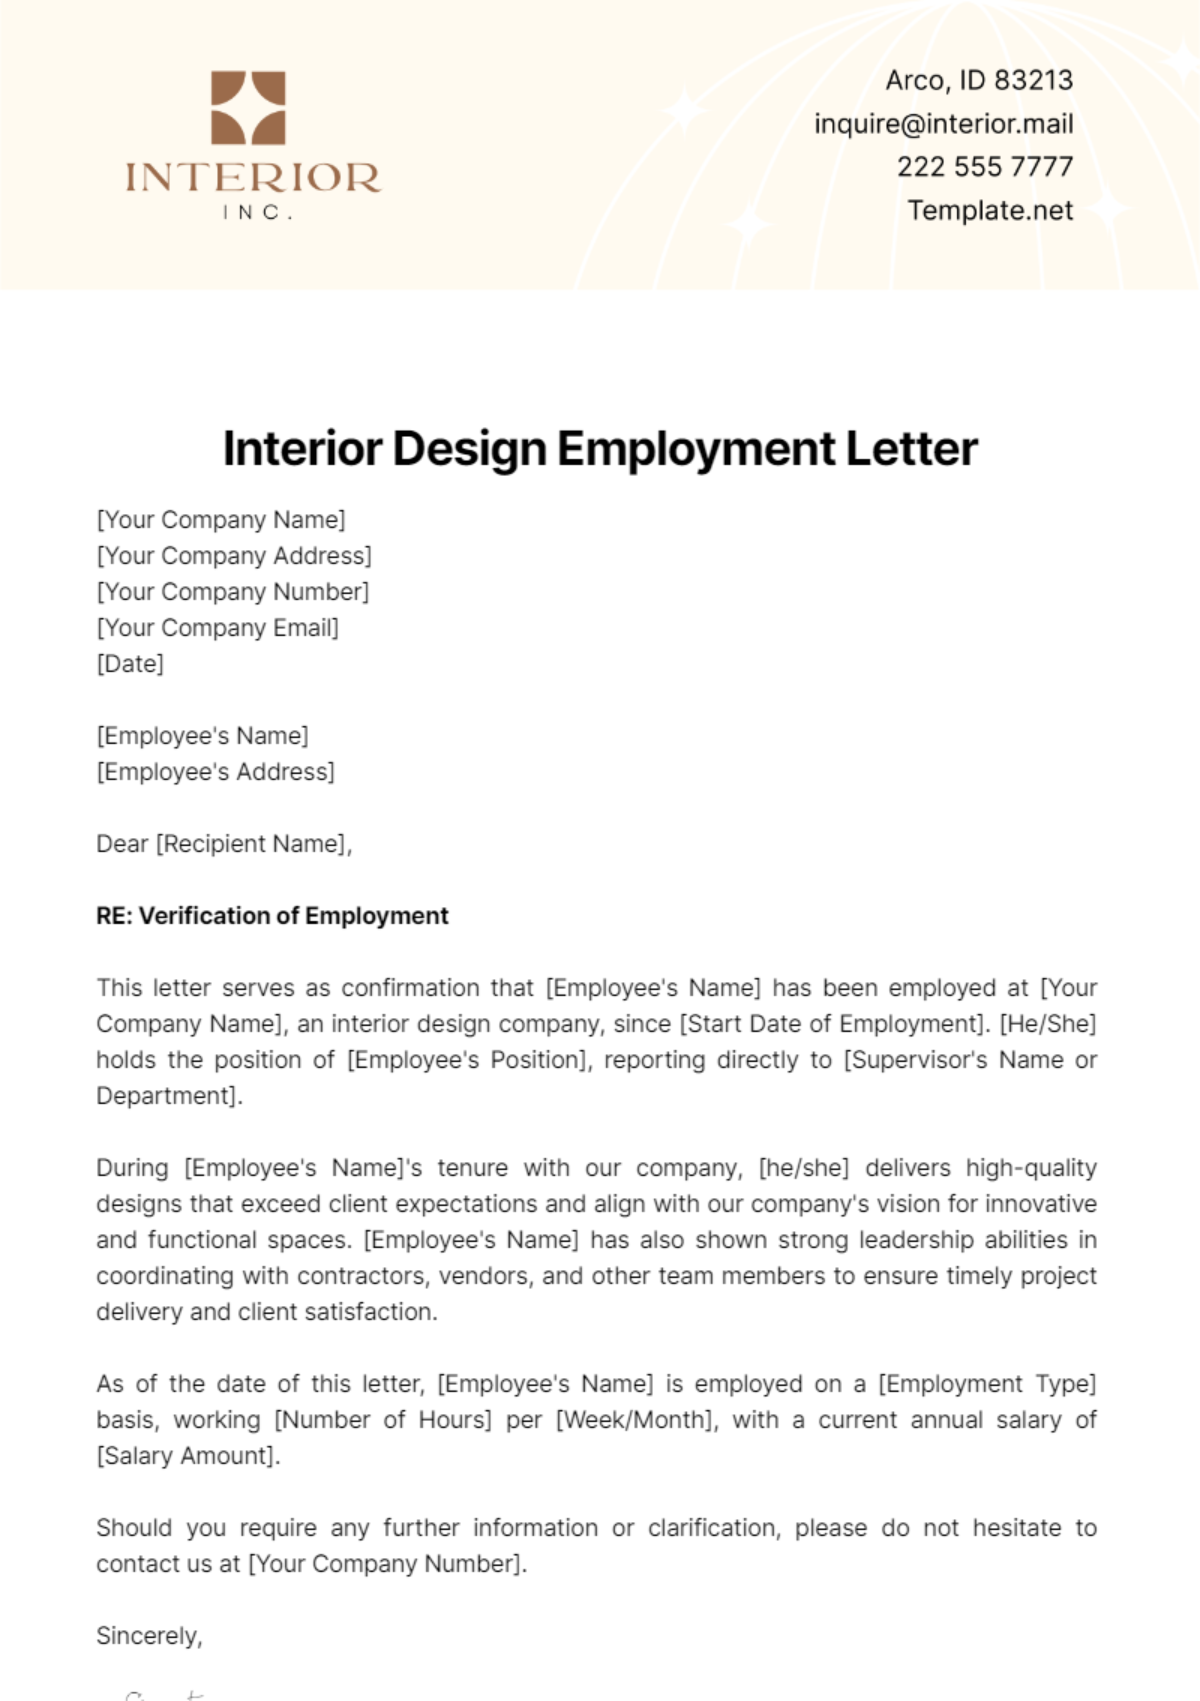 Interior Design Employment Letter Template